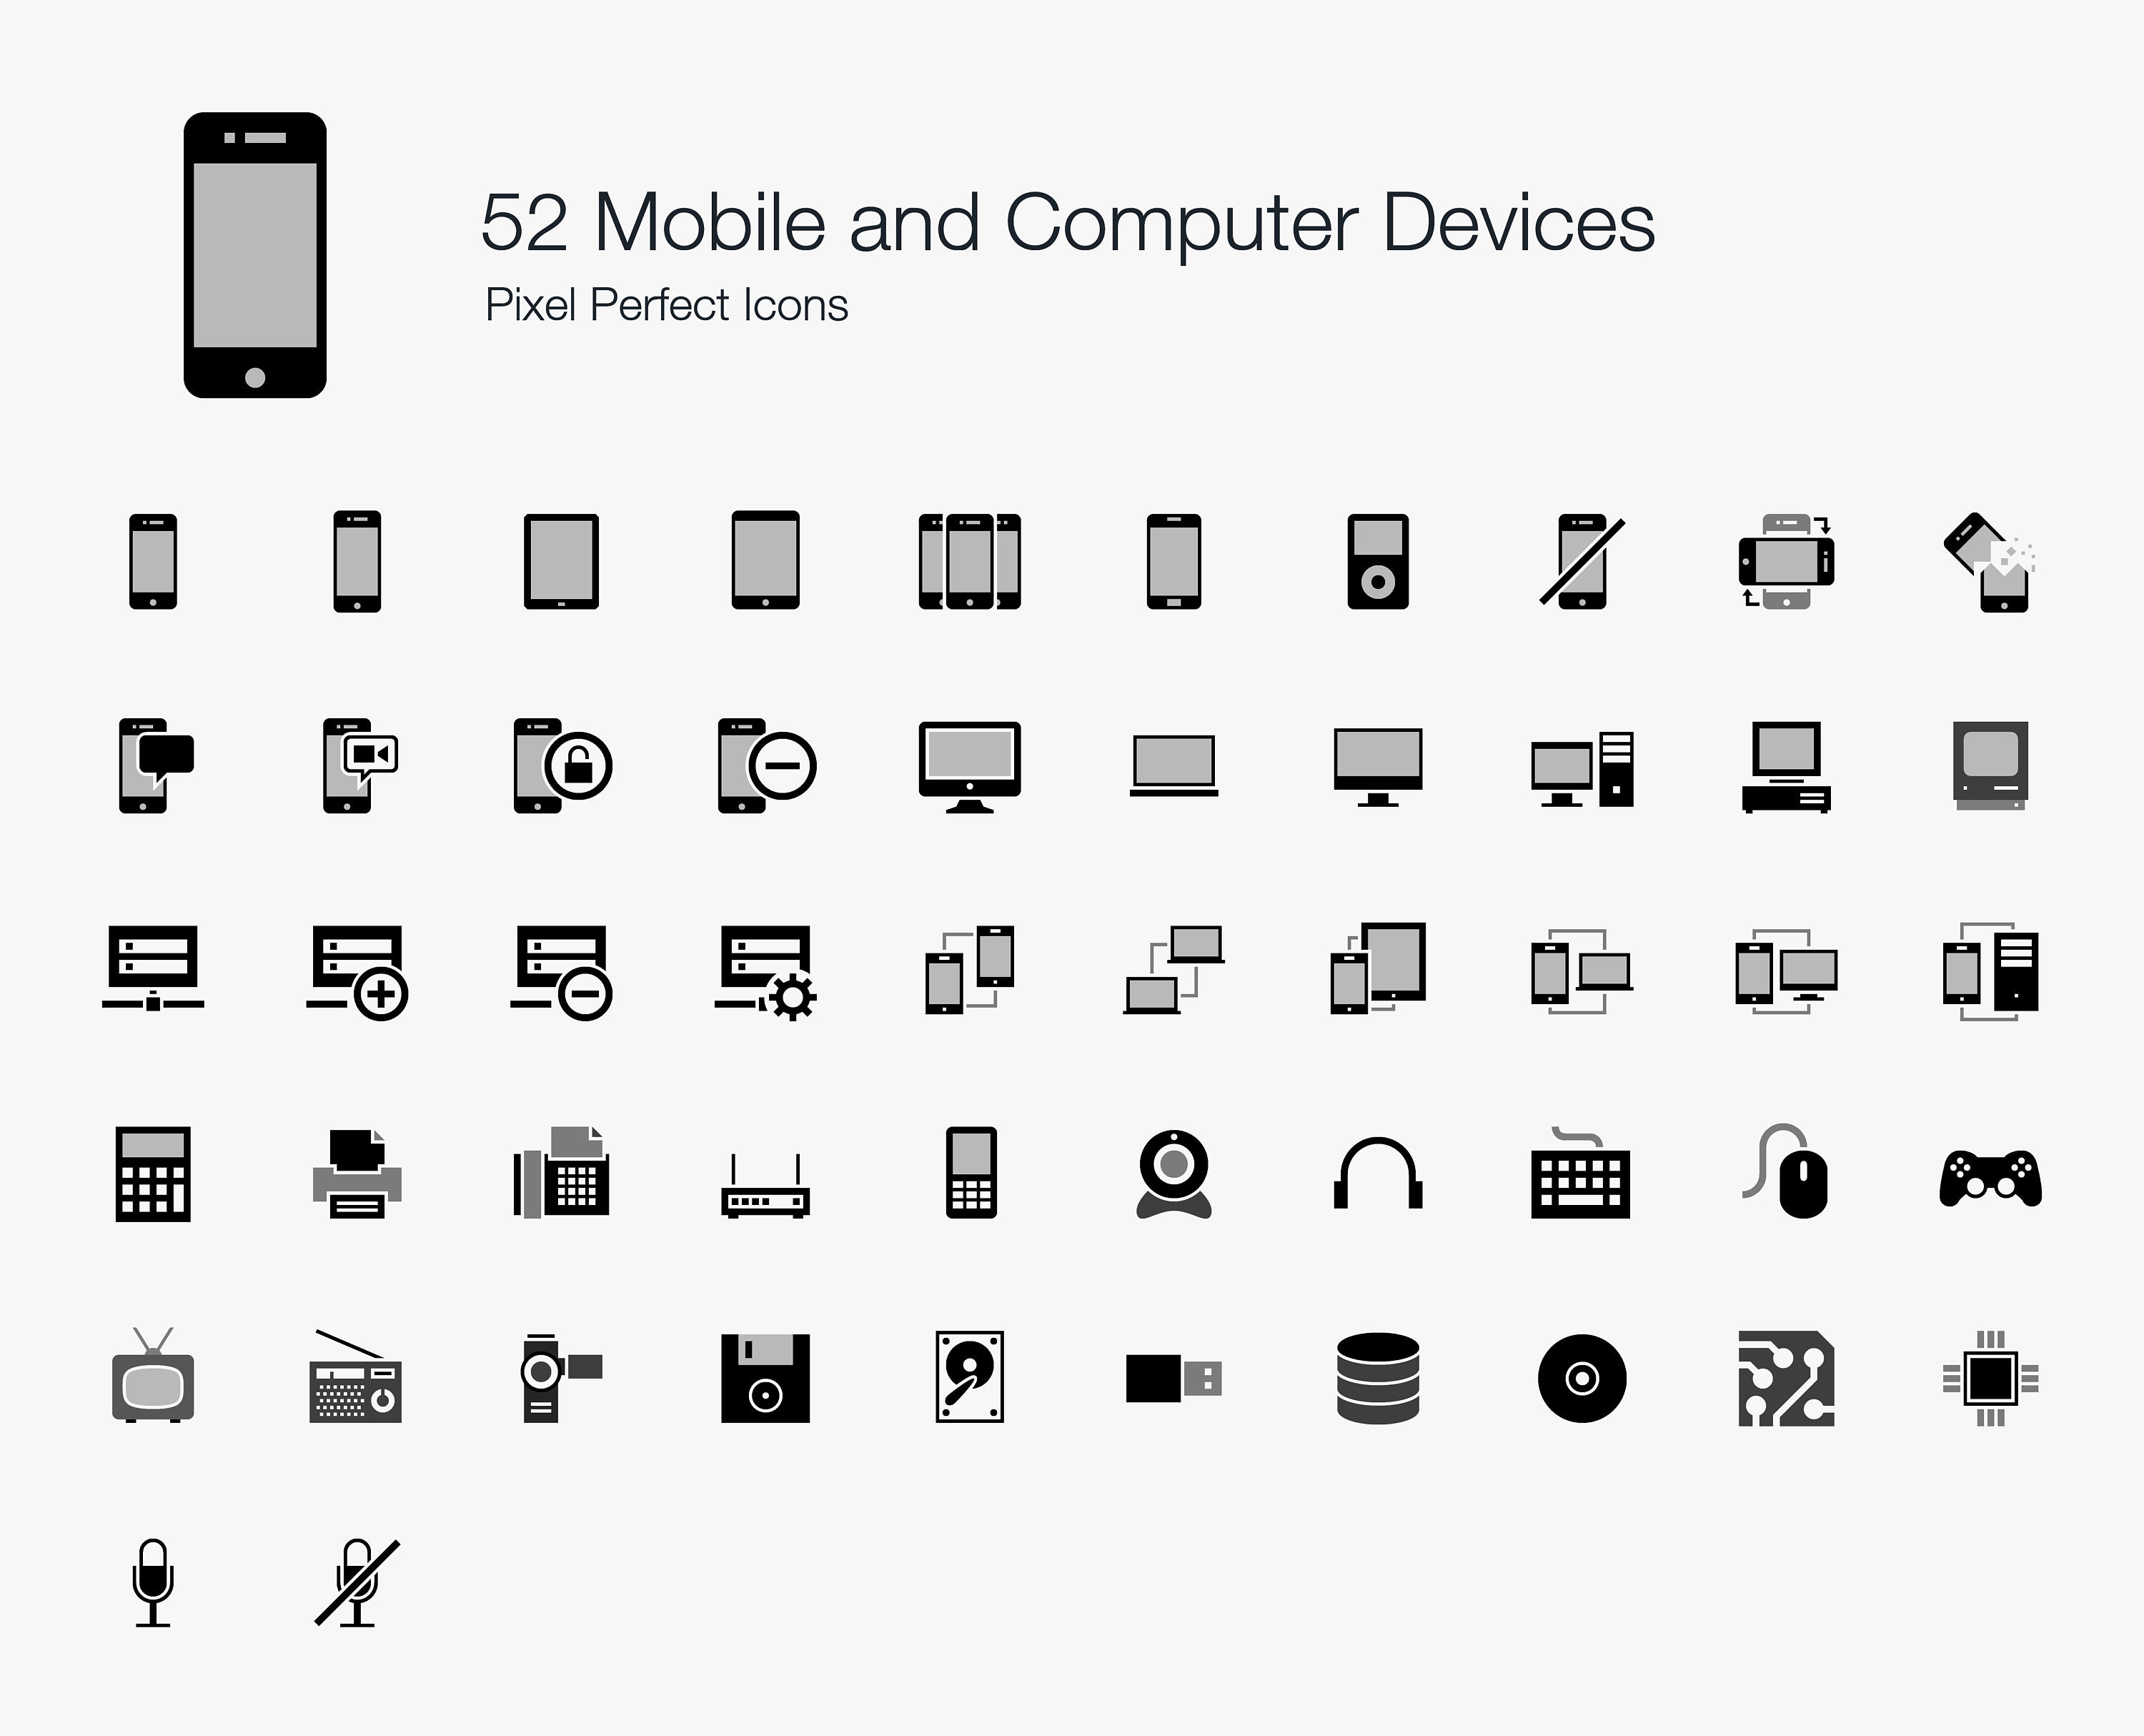 computer signs symbols icons